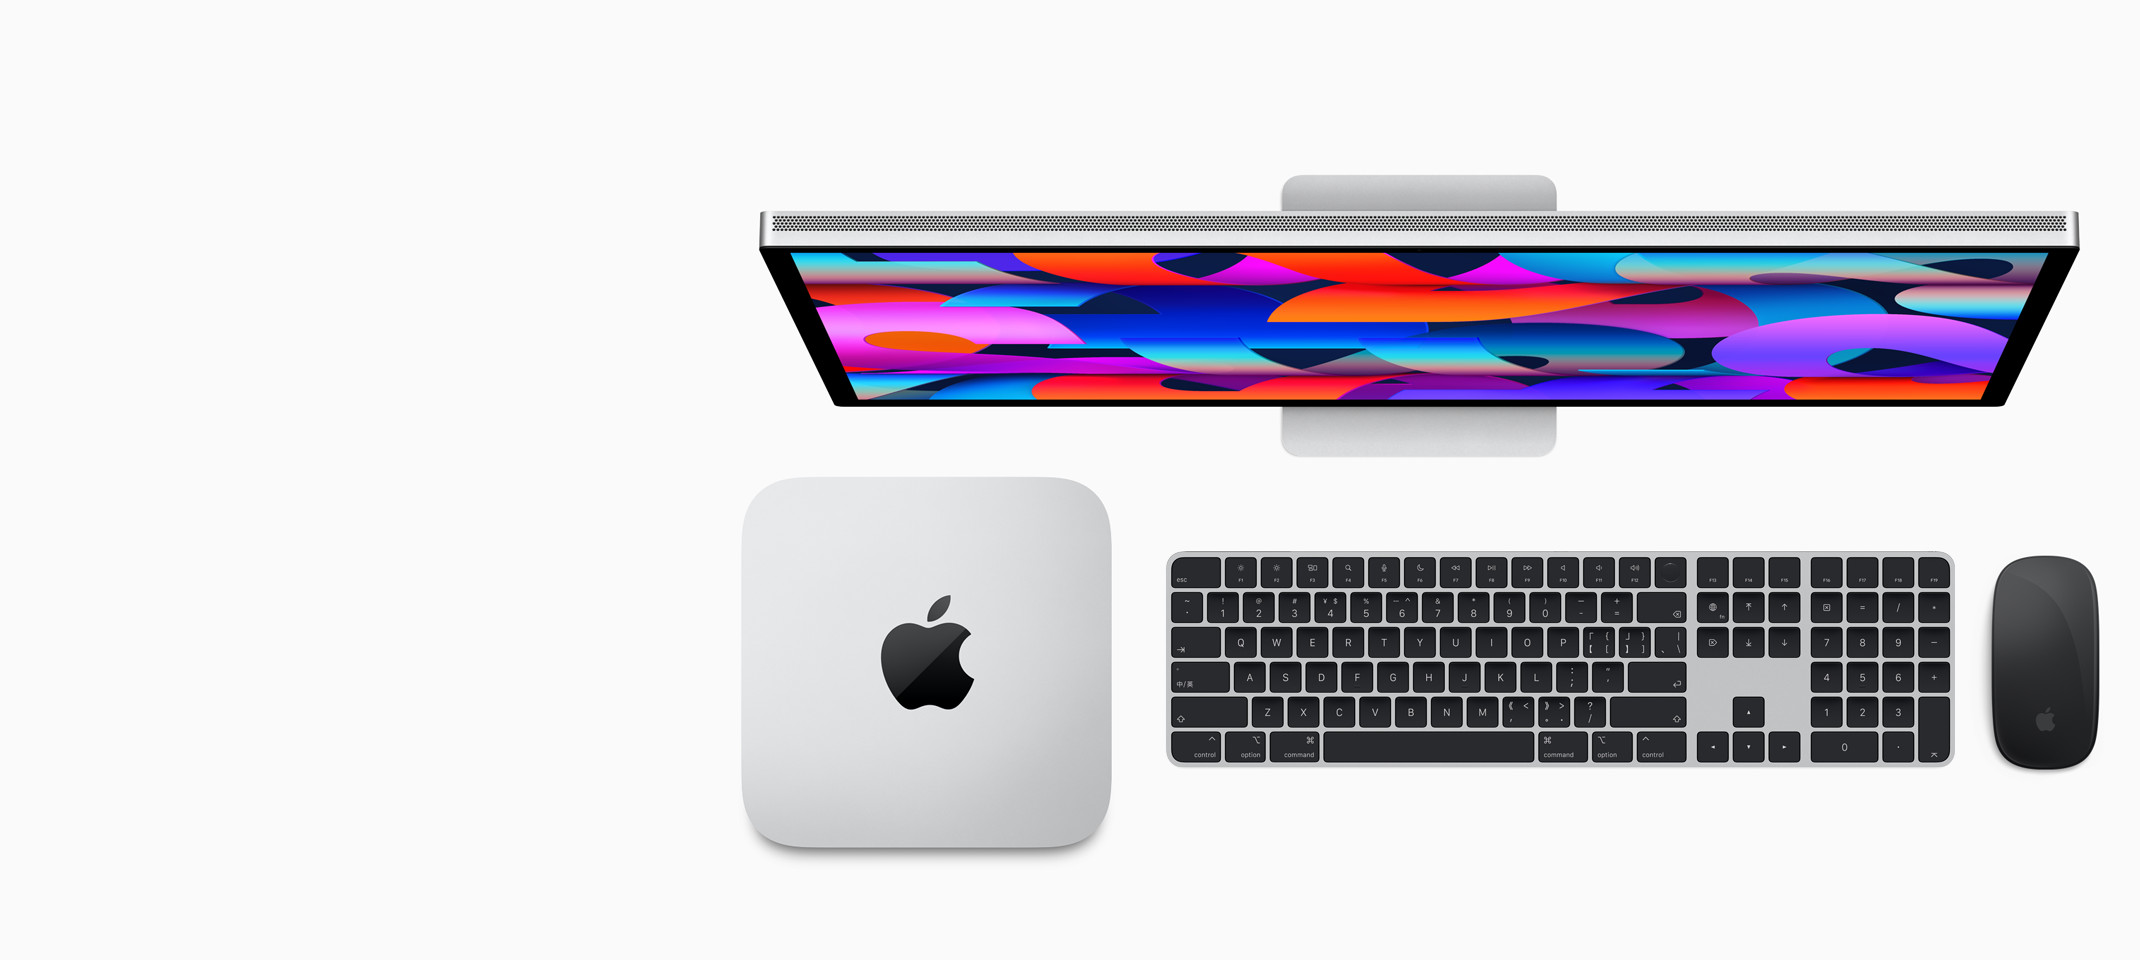 Studio Display、Mac Studio、带有触控 ID 和数字小键盘的妙控键盘，以及妙控鼠标。